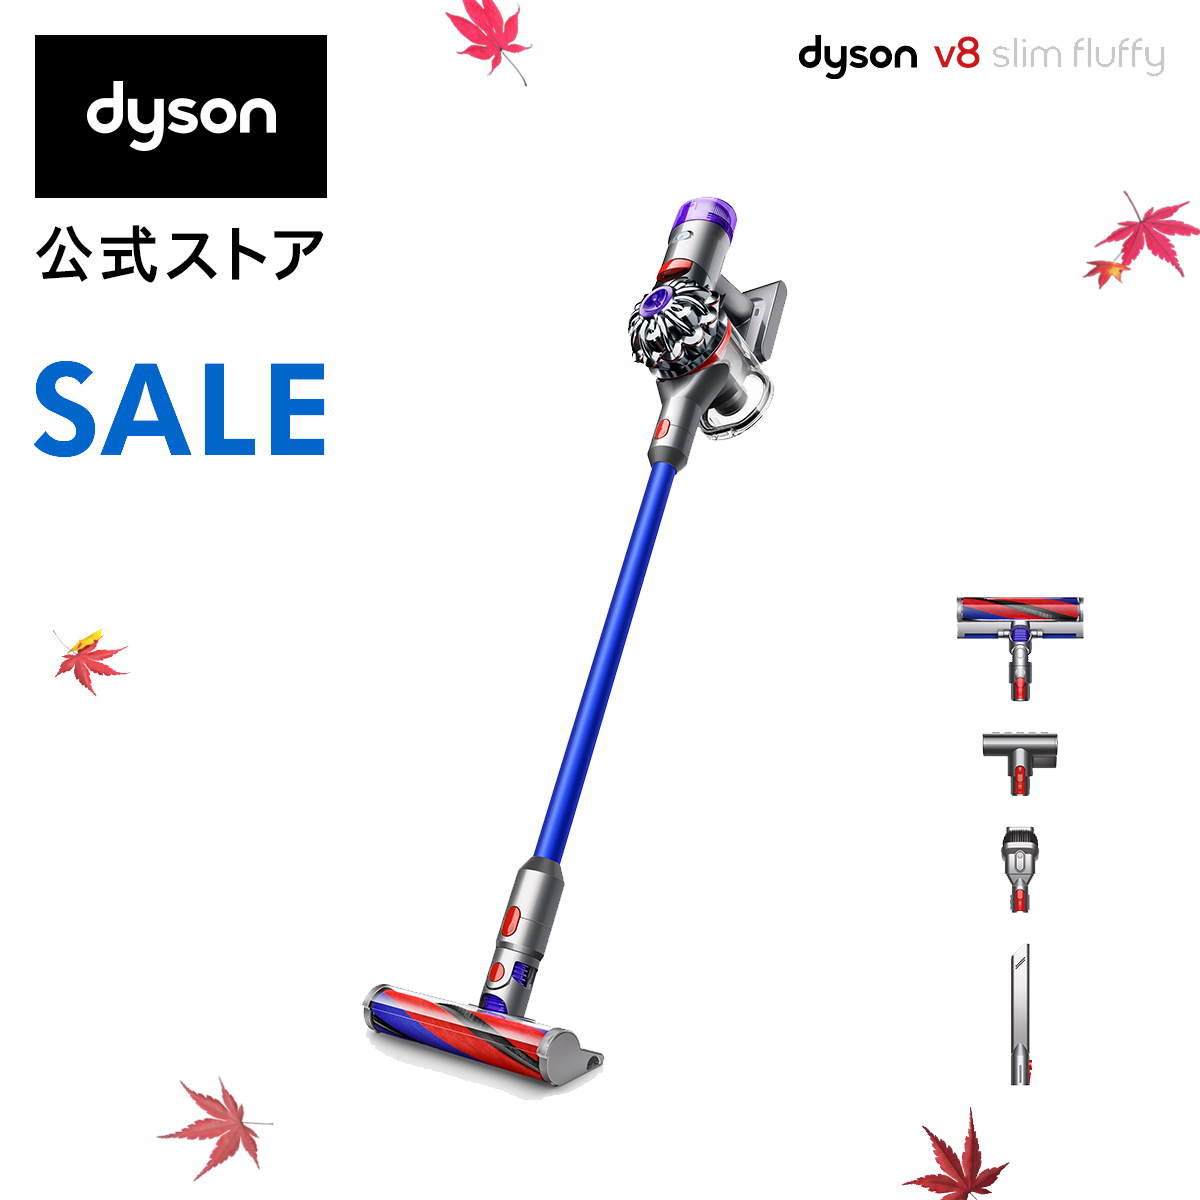 v8slim ダイソン   掃除機の通販・価格比較   価格.com